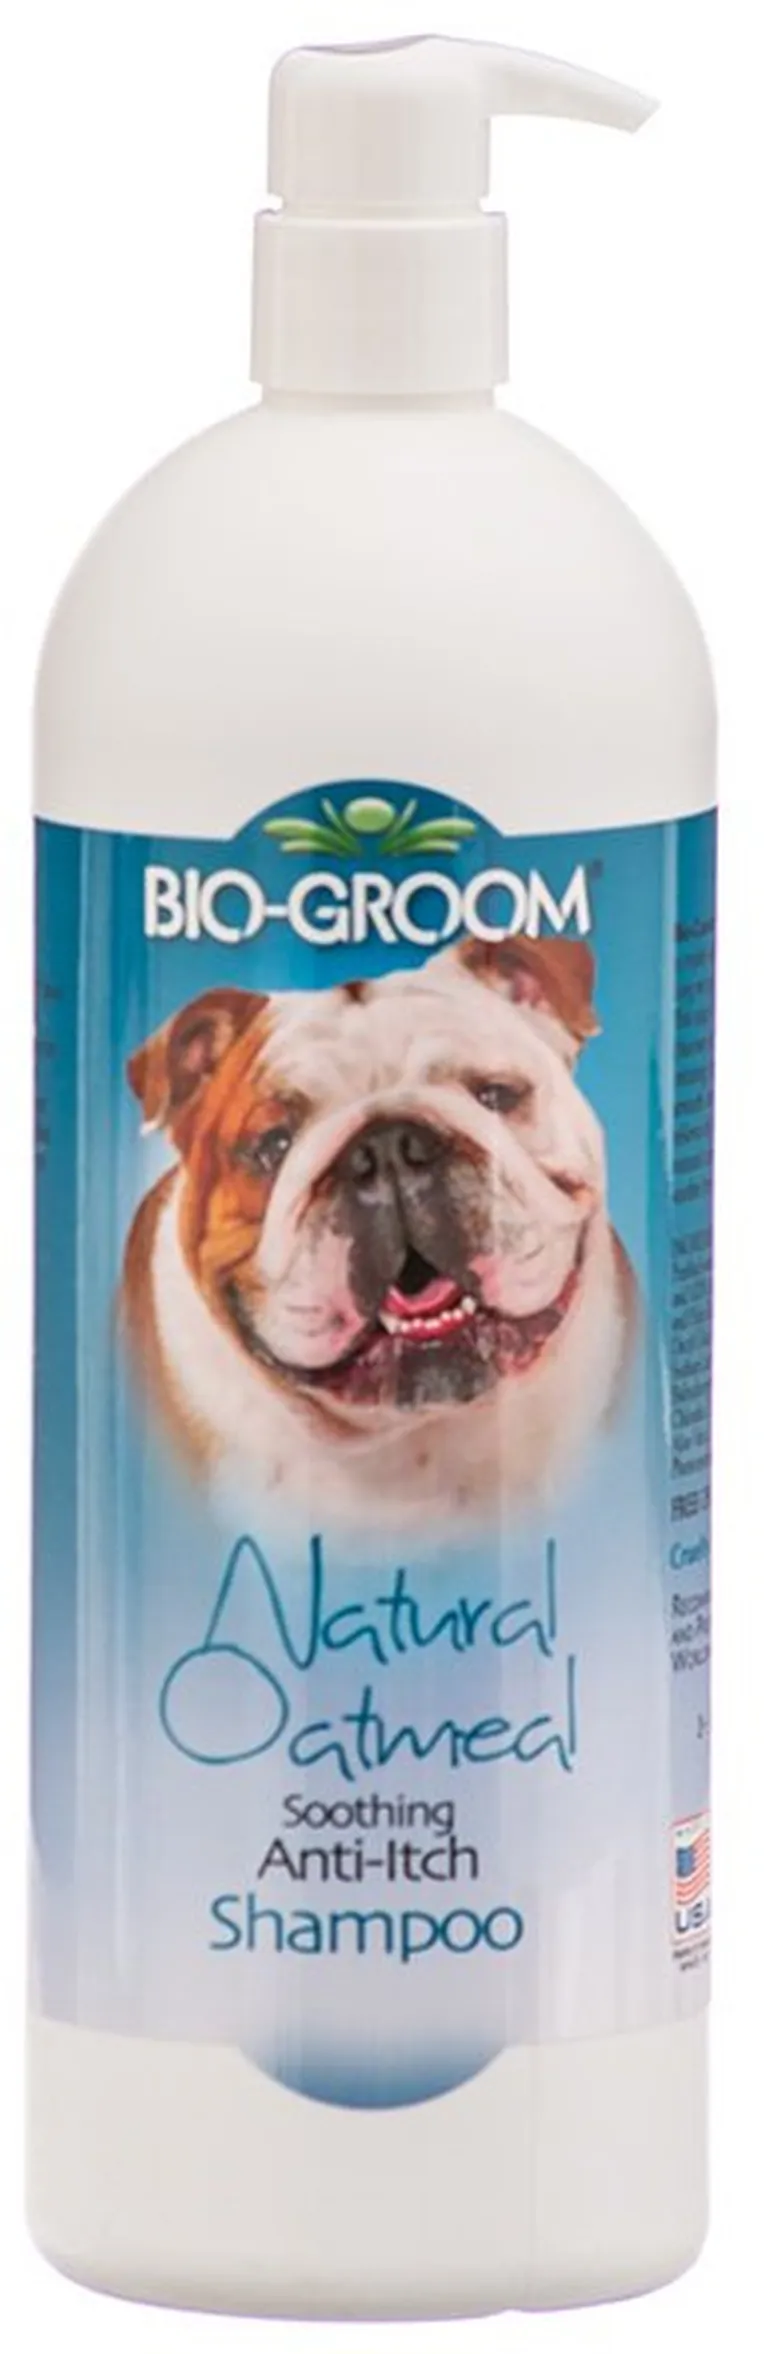 Bio Groom Natural Oatmeal Soothing Anti-Itch Shampoo Photo 1